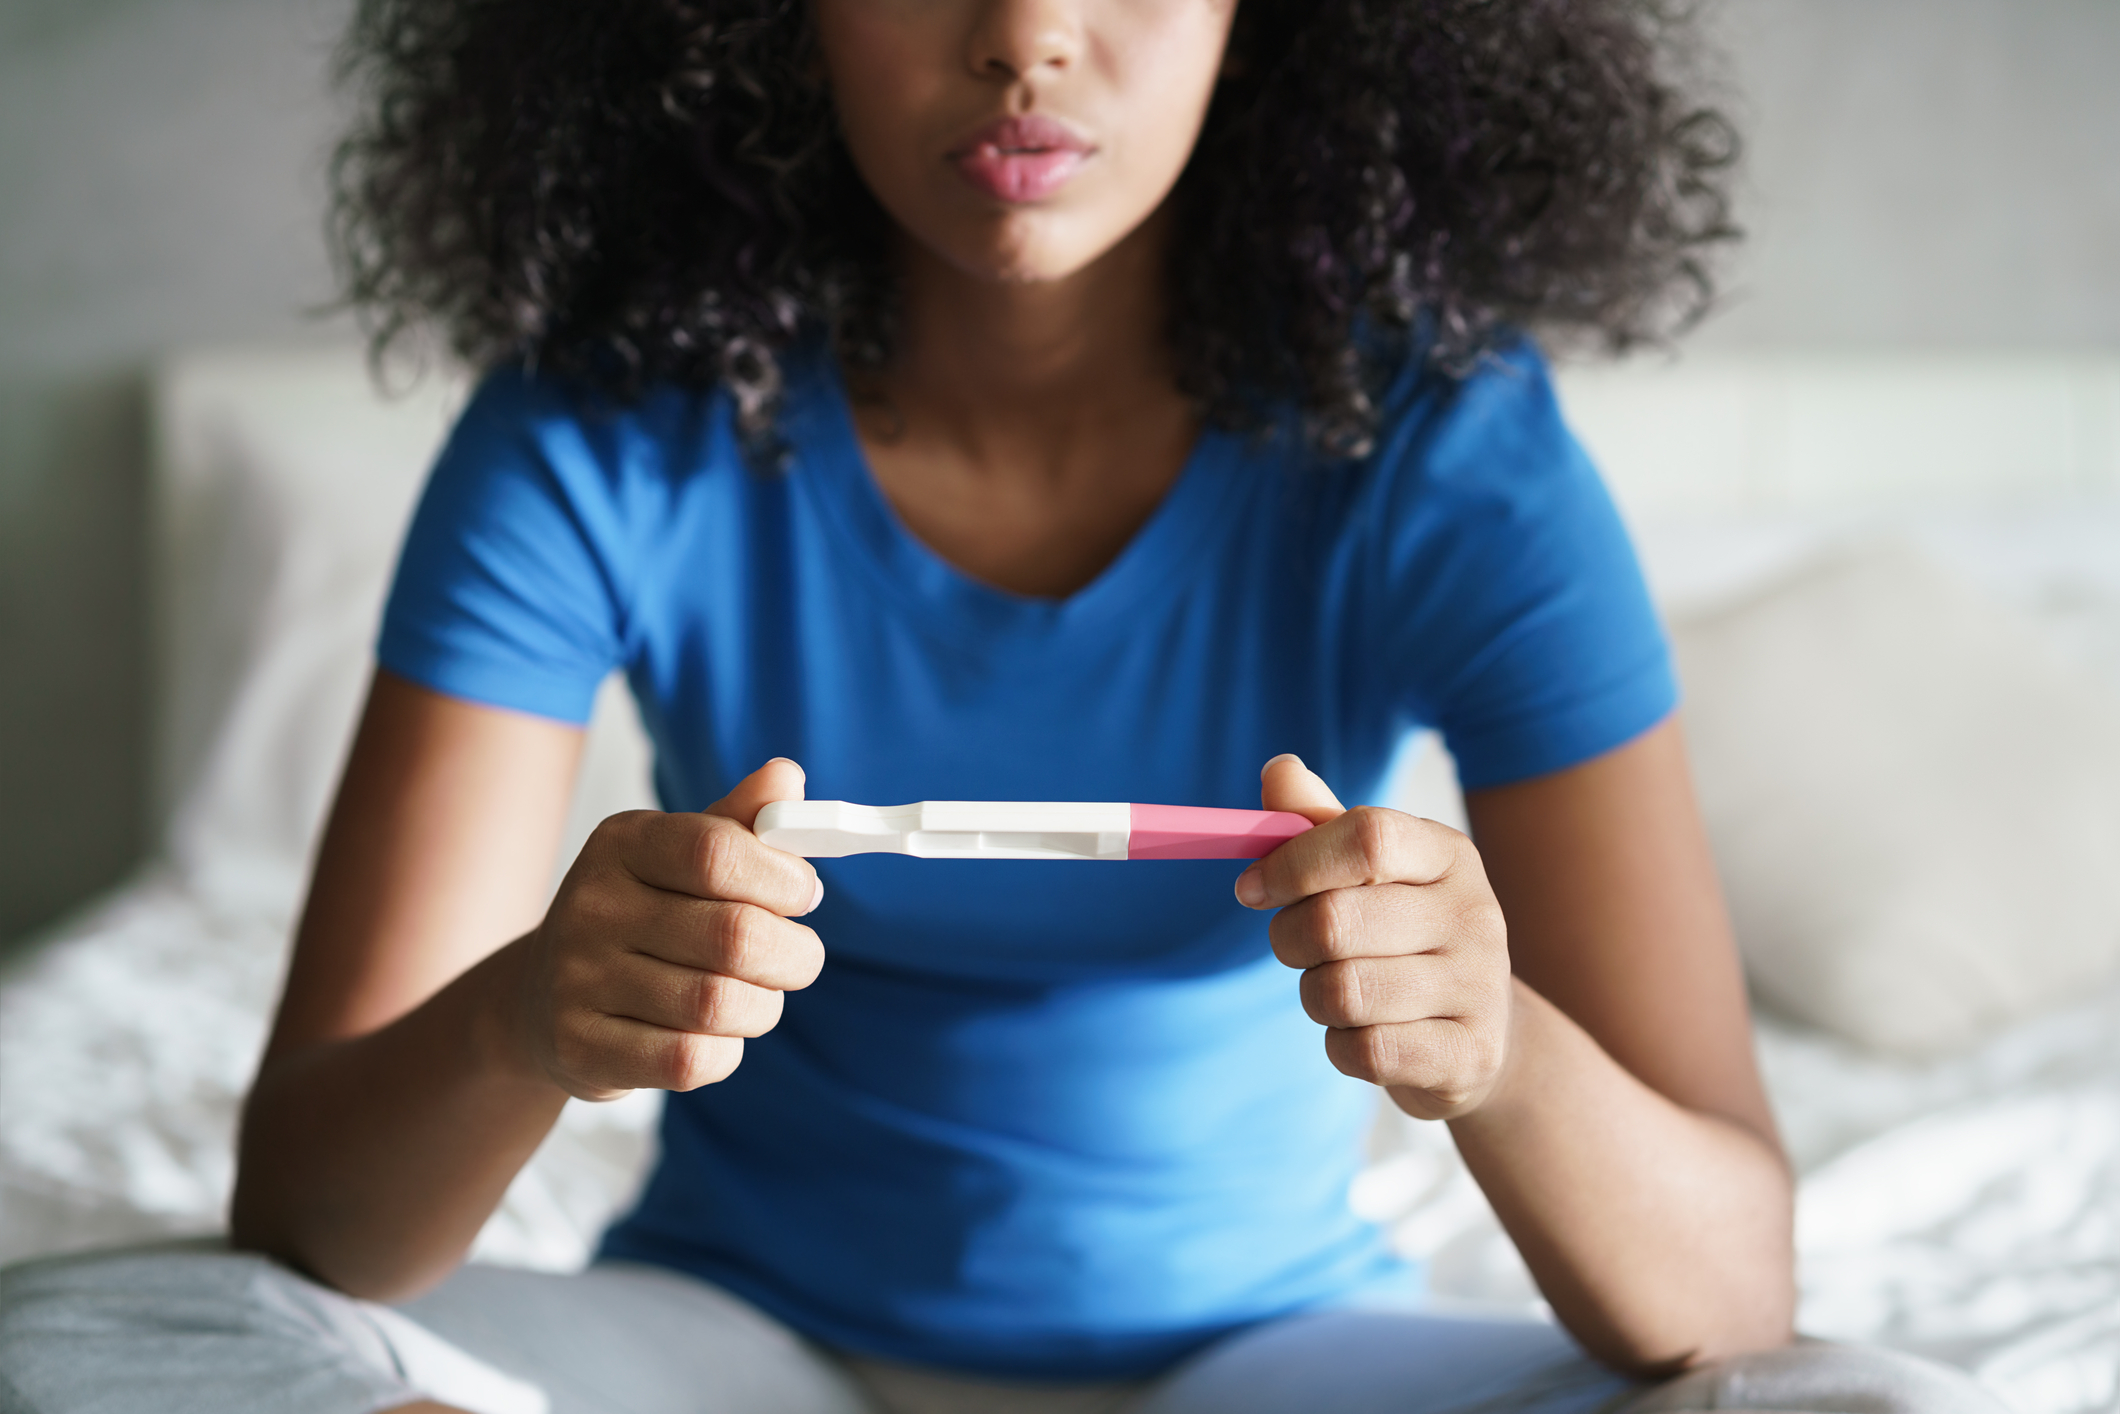 test de grossesse